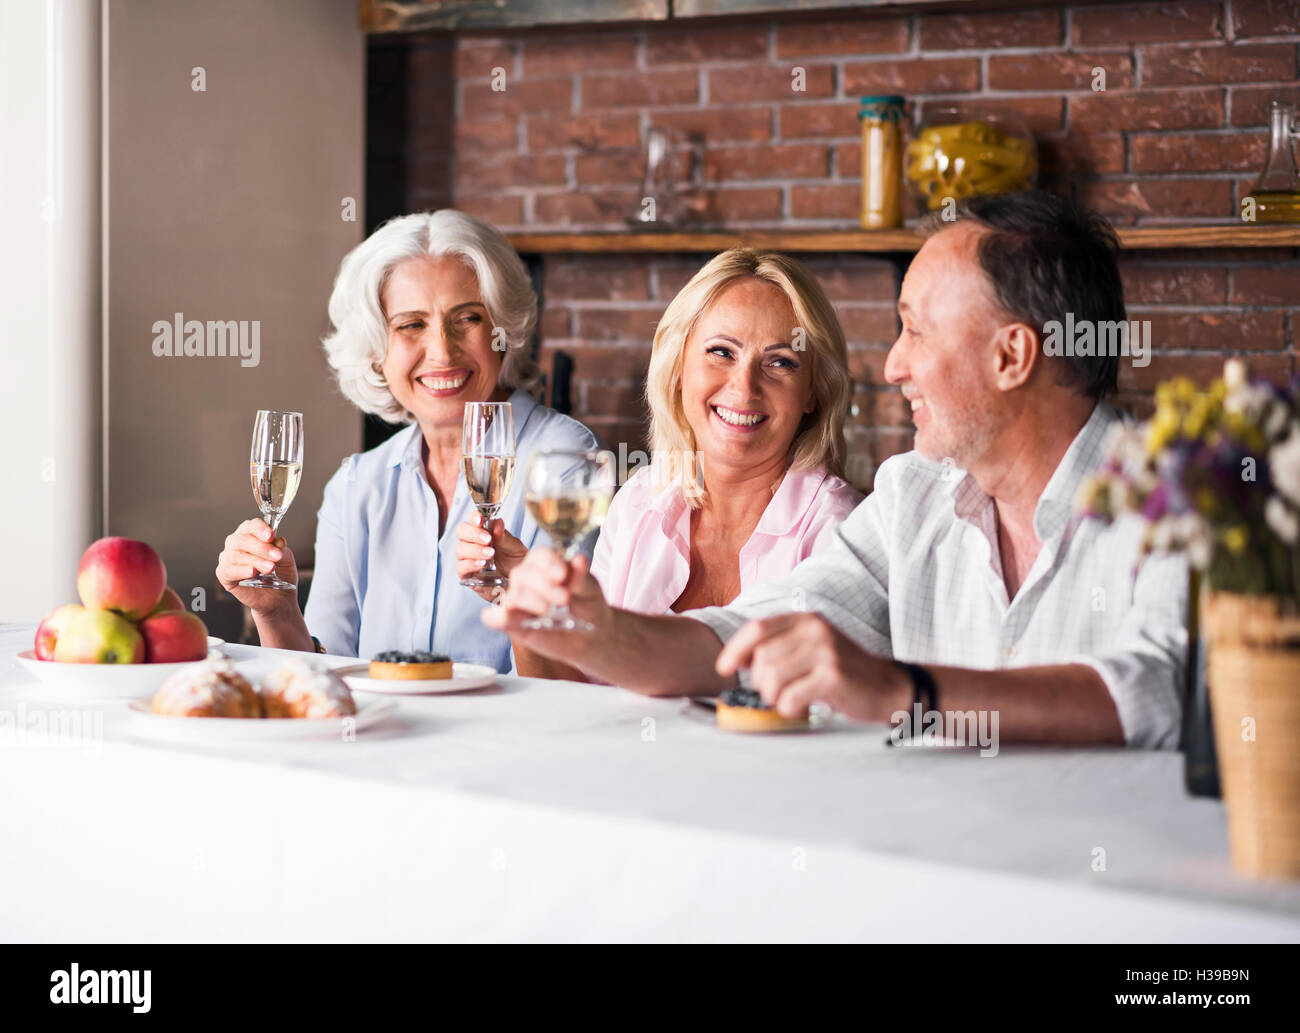 Smiling family enjoying the holiday meal Stock Photo